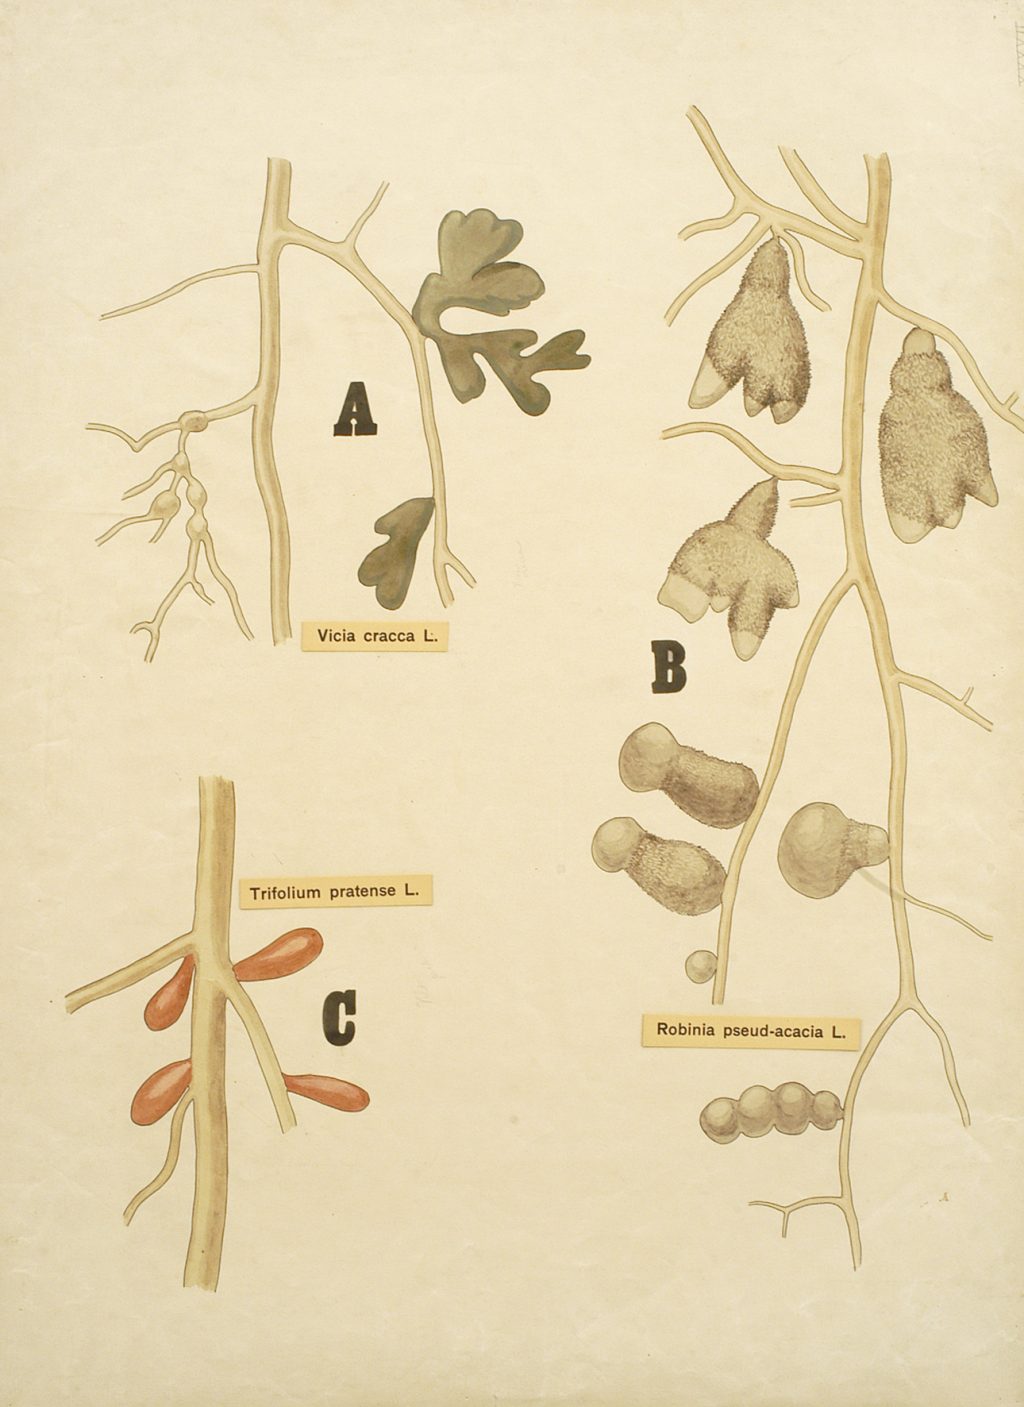 Illustration of the nodules of three nitrogen-fixing plants: Viccia cracca, Trifolium pratense, and Robinia pseud-acacia